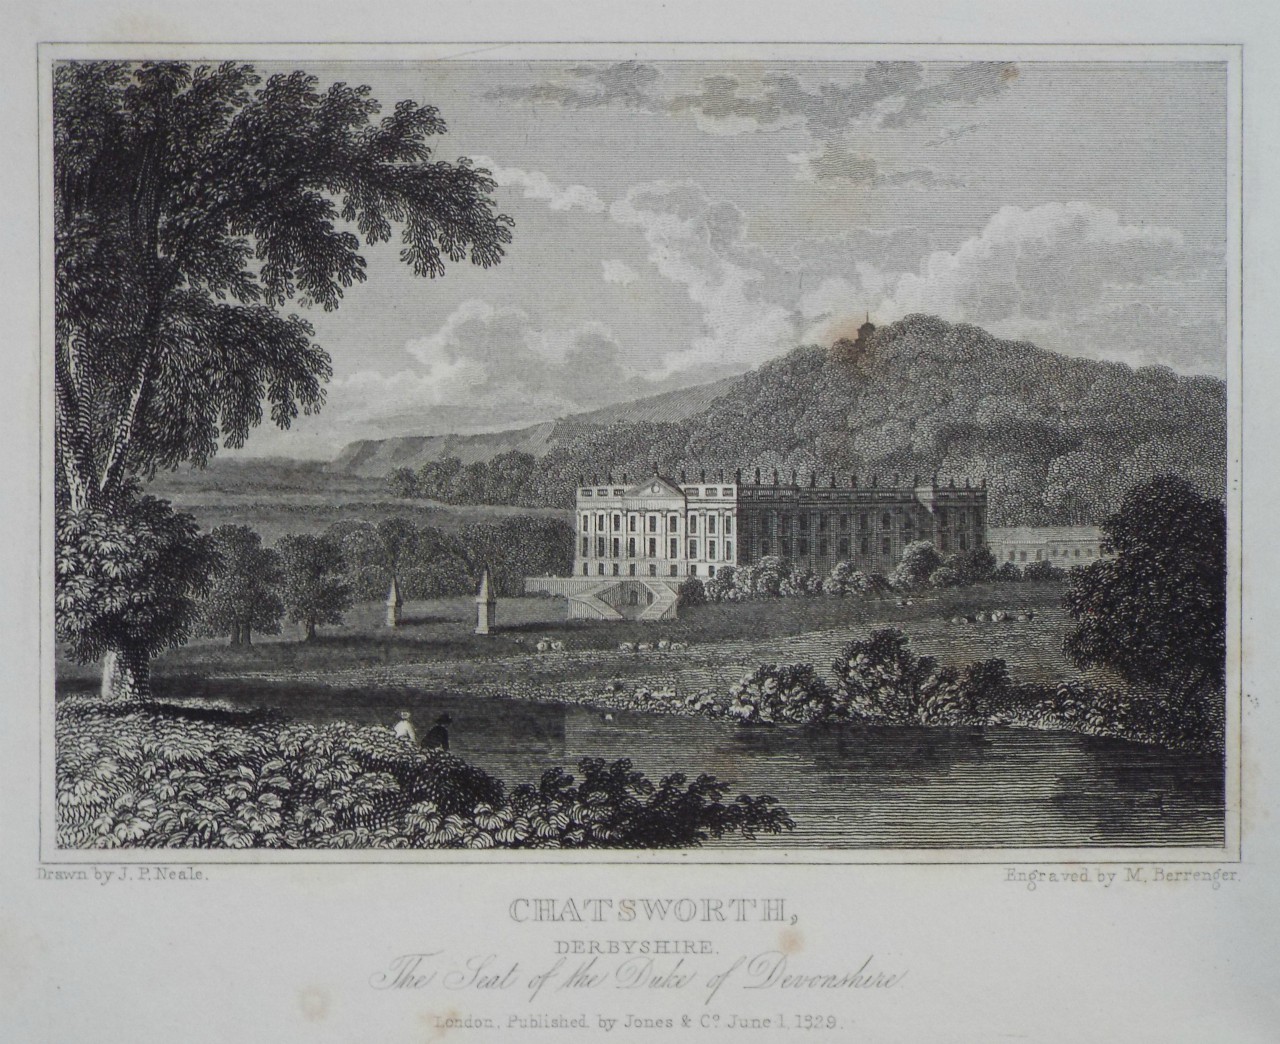 Print - Chatsworth, Derbyshire. The Seat of the Duke of Devonshire. - Berrenger